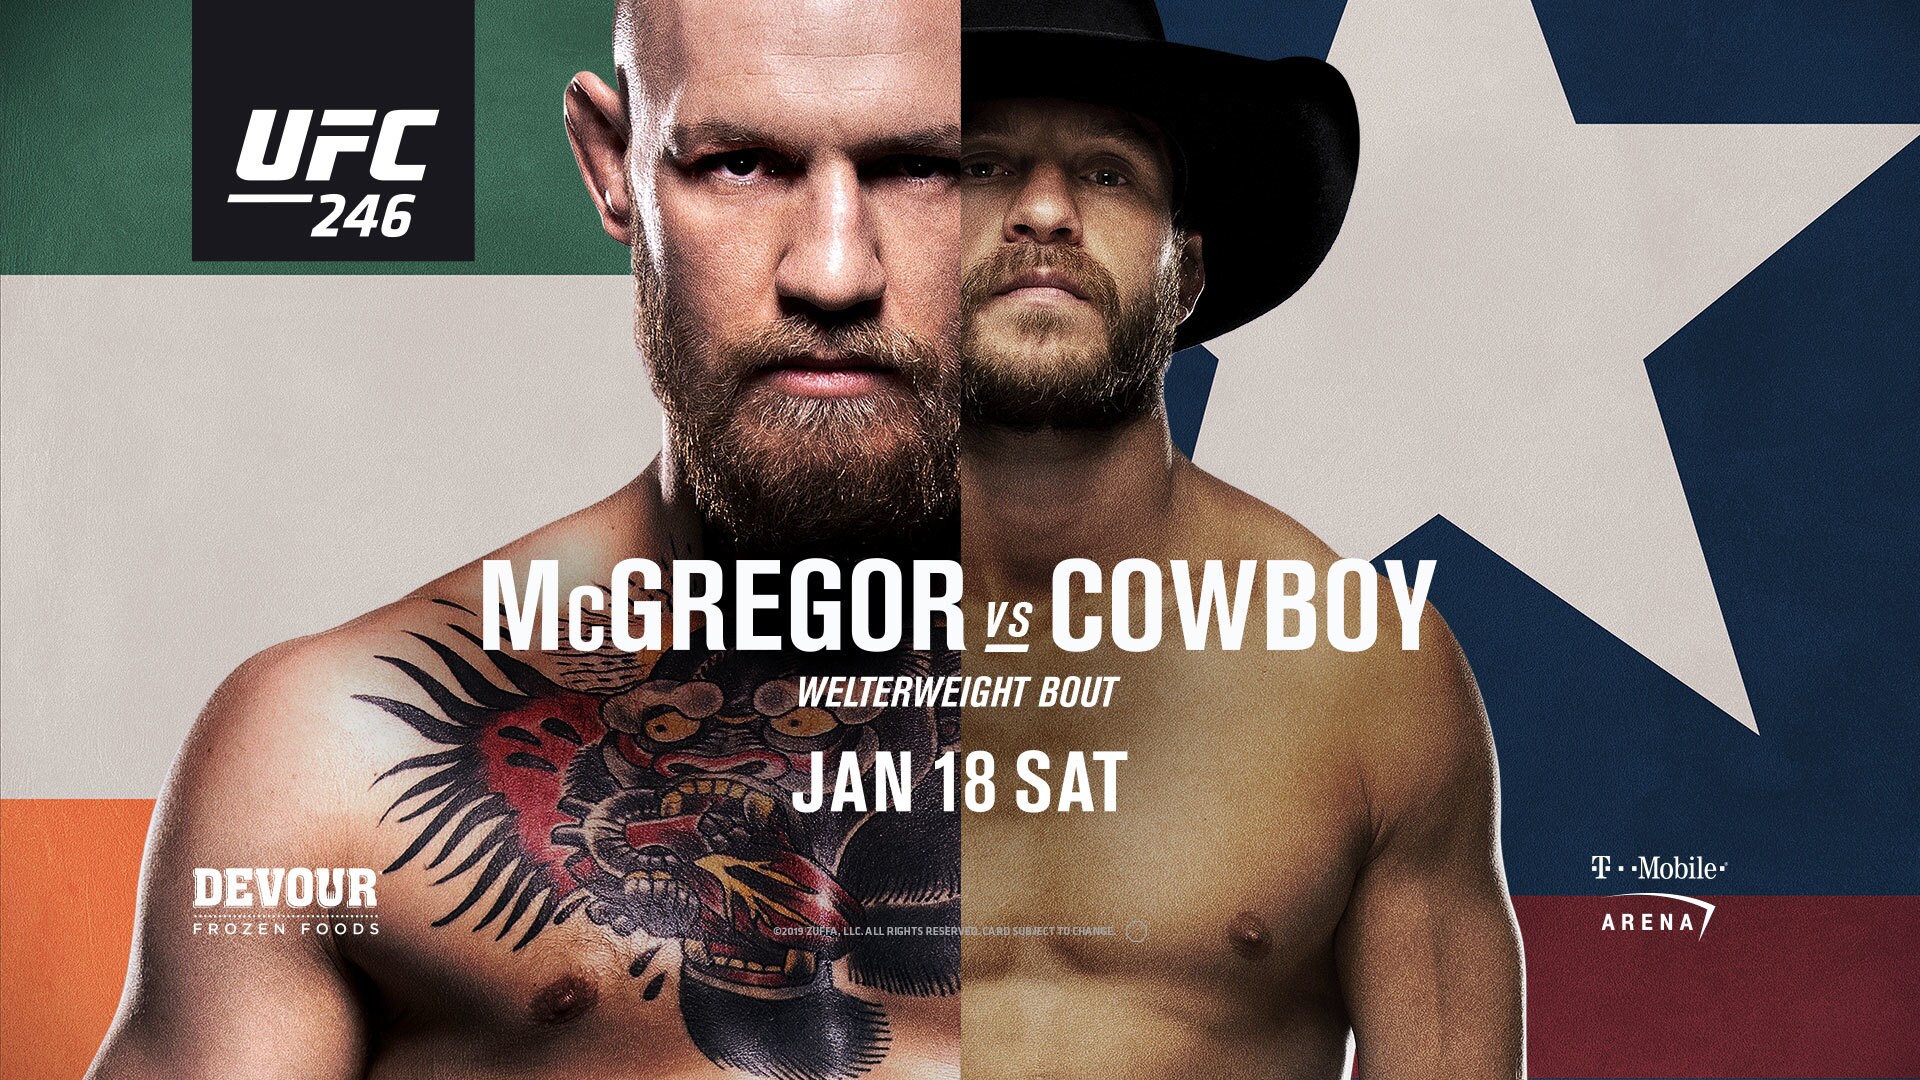 UFC 246 Conor Mcgregor Vs.Donald Cerrone Fotodruck Poster Las Vegas Mma 2020 